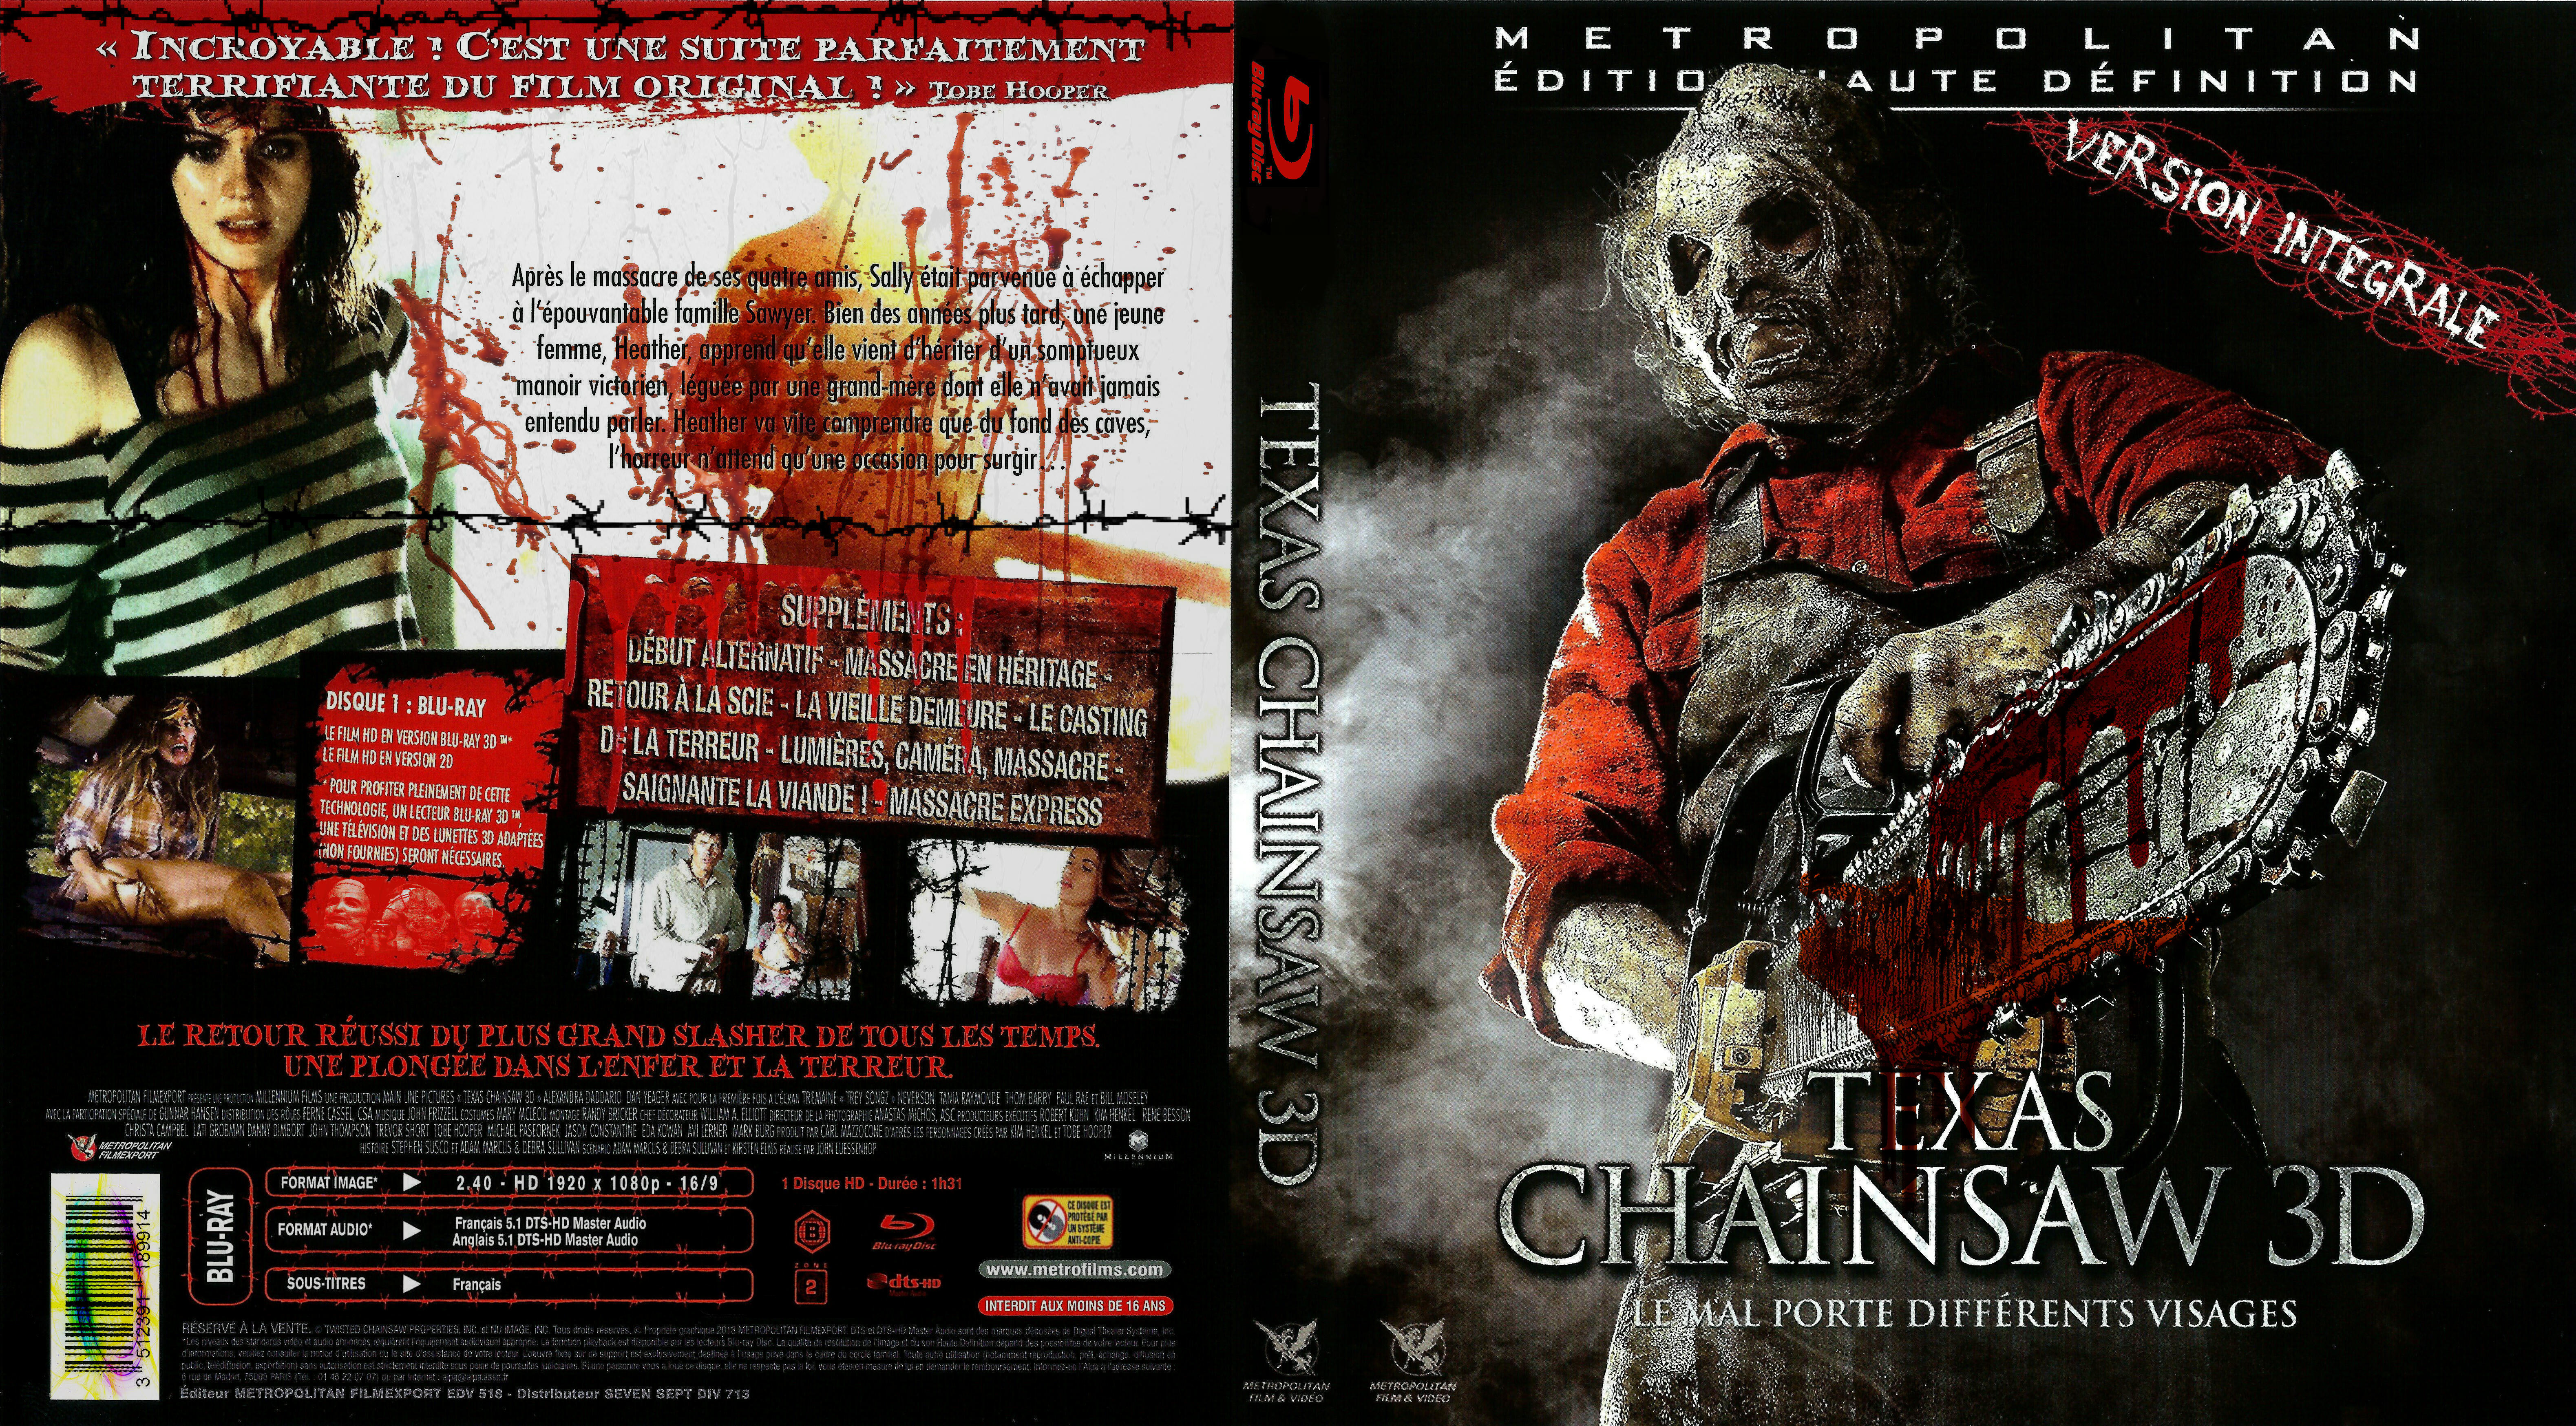 Jaquette DVD Texas Chainsaw custom (BLU-RAY)